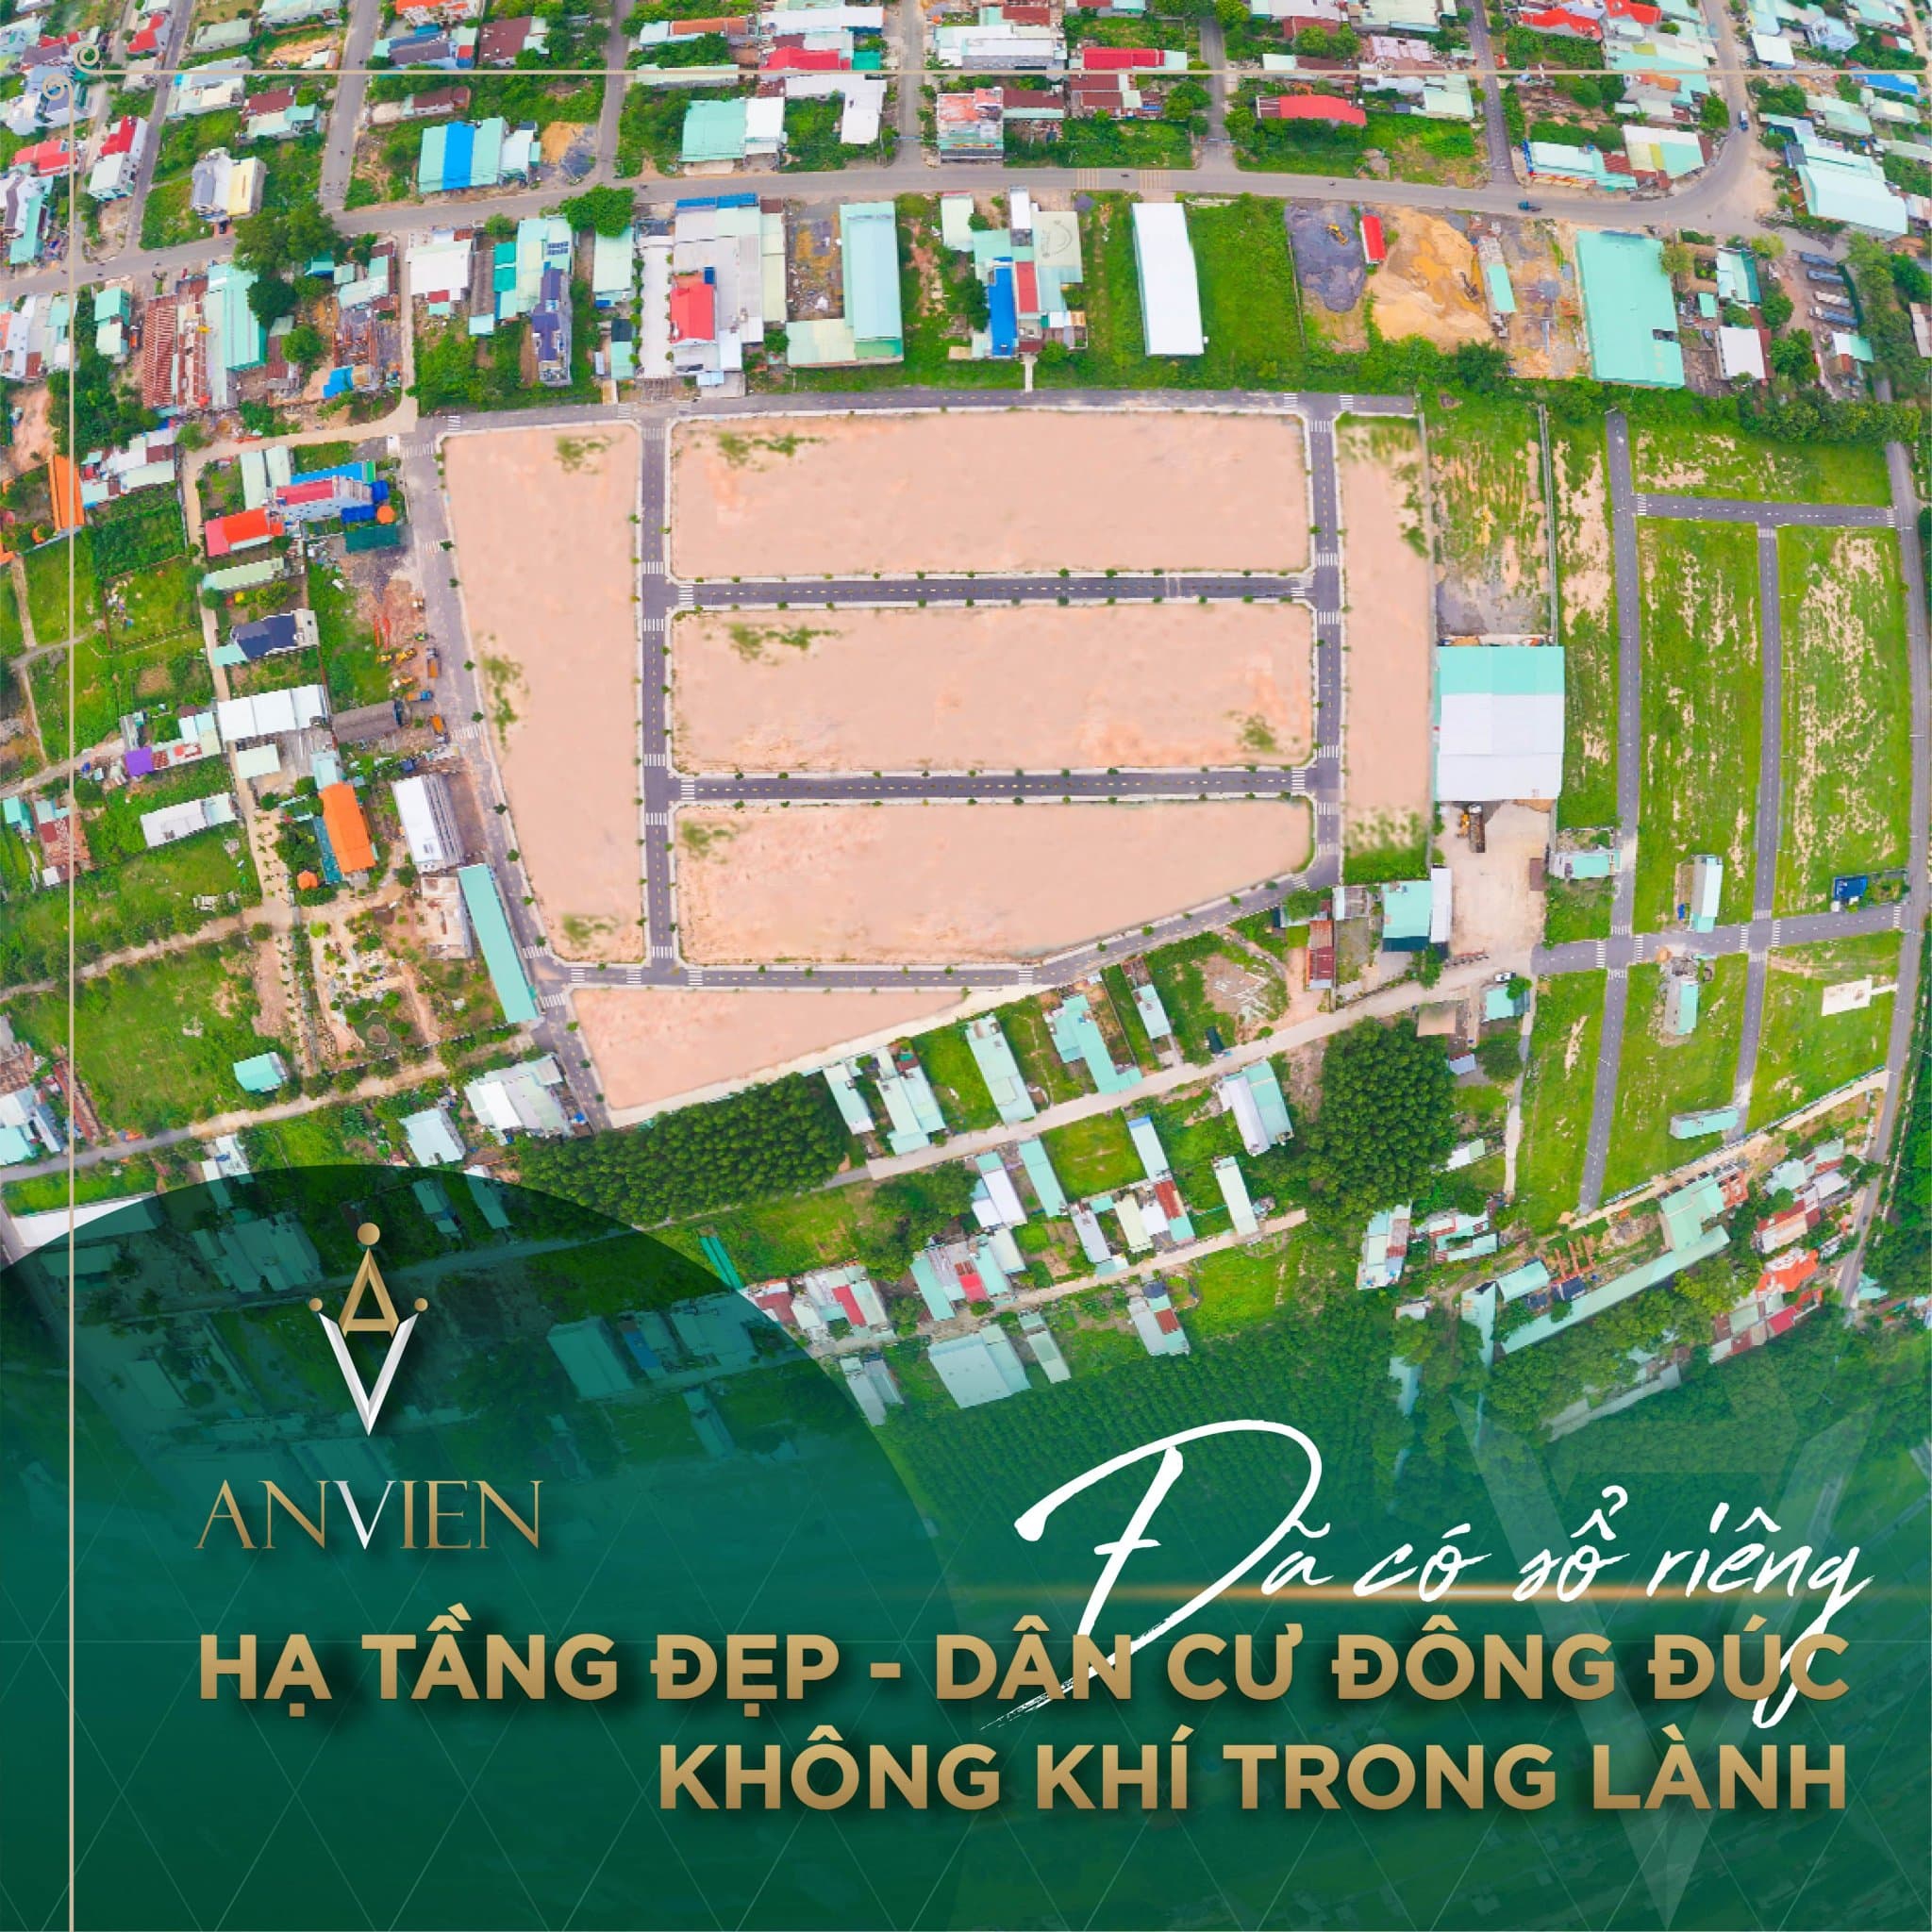 Tiem Nang Khu Dan Cu An Vien Residence Trang Bom Dong Nai